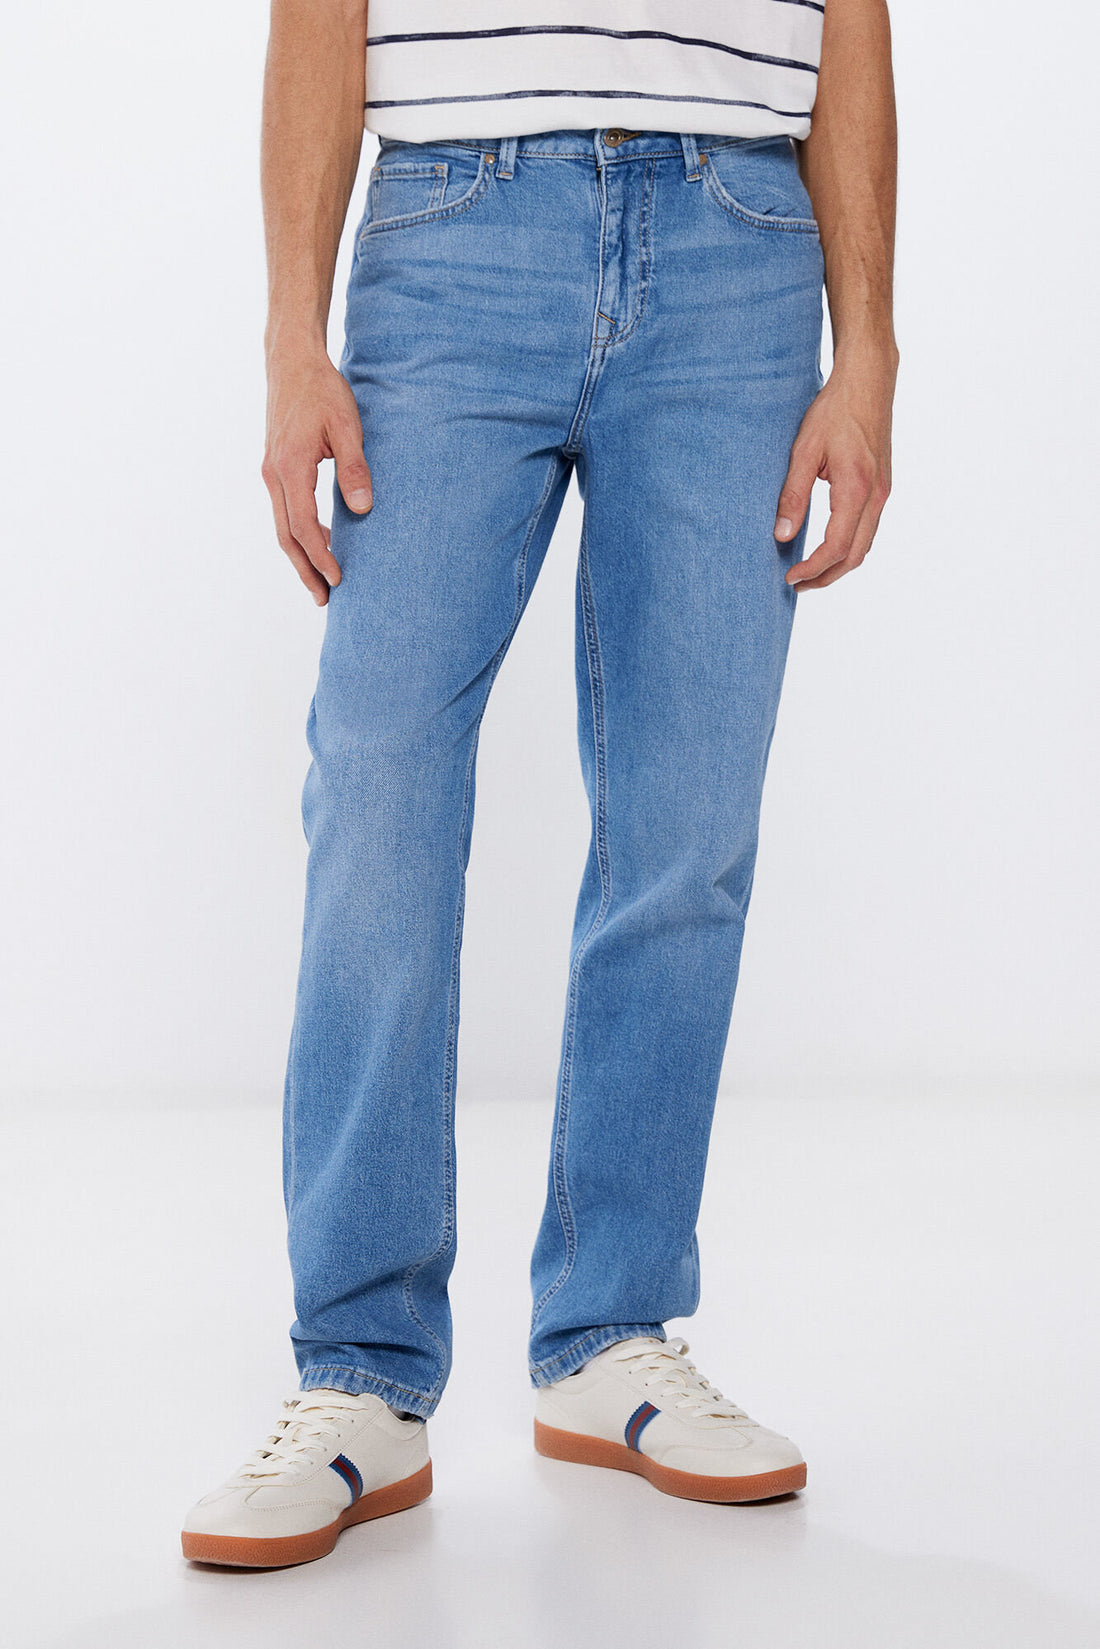 Light Wash Standard Fit Jeans_1757528_14_02